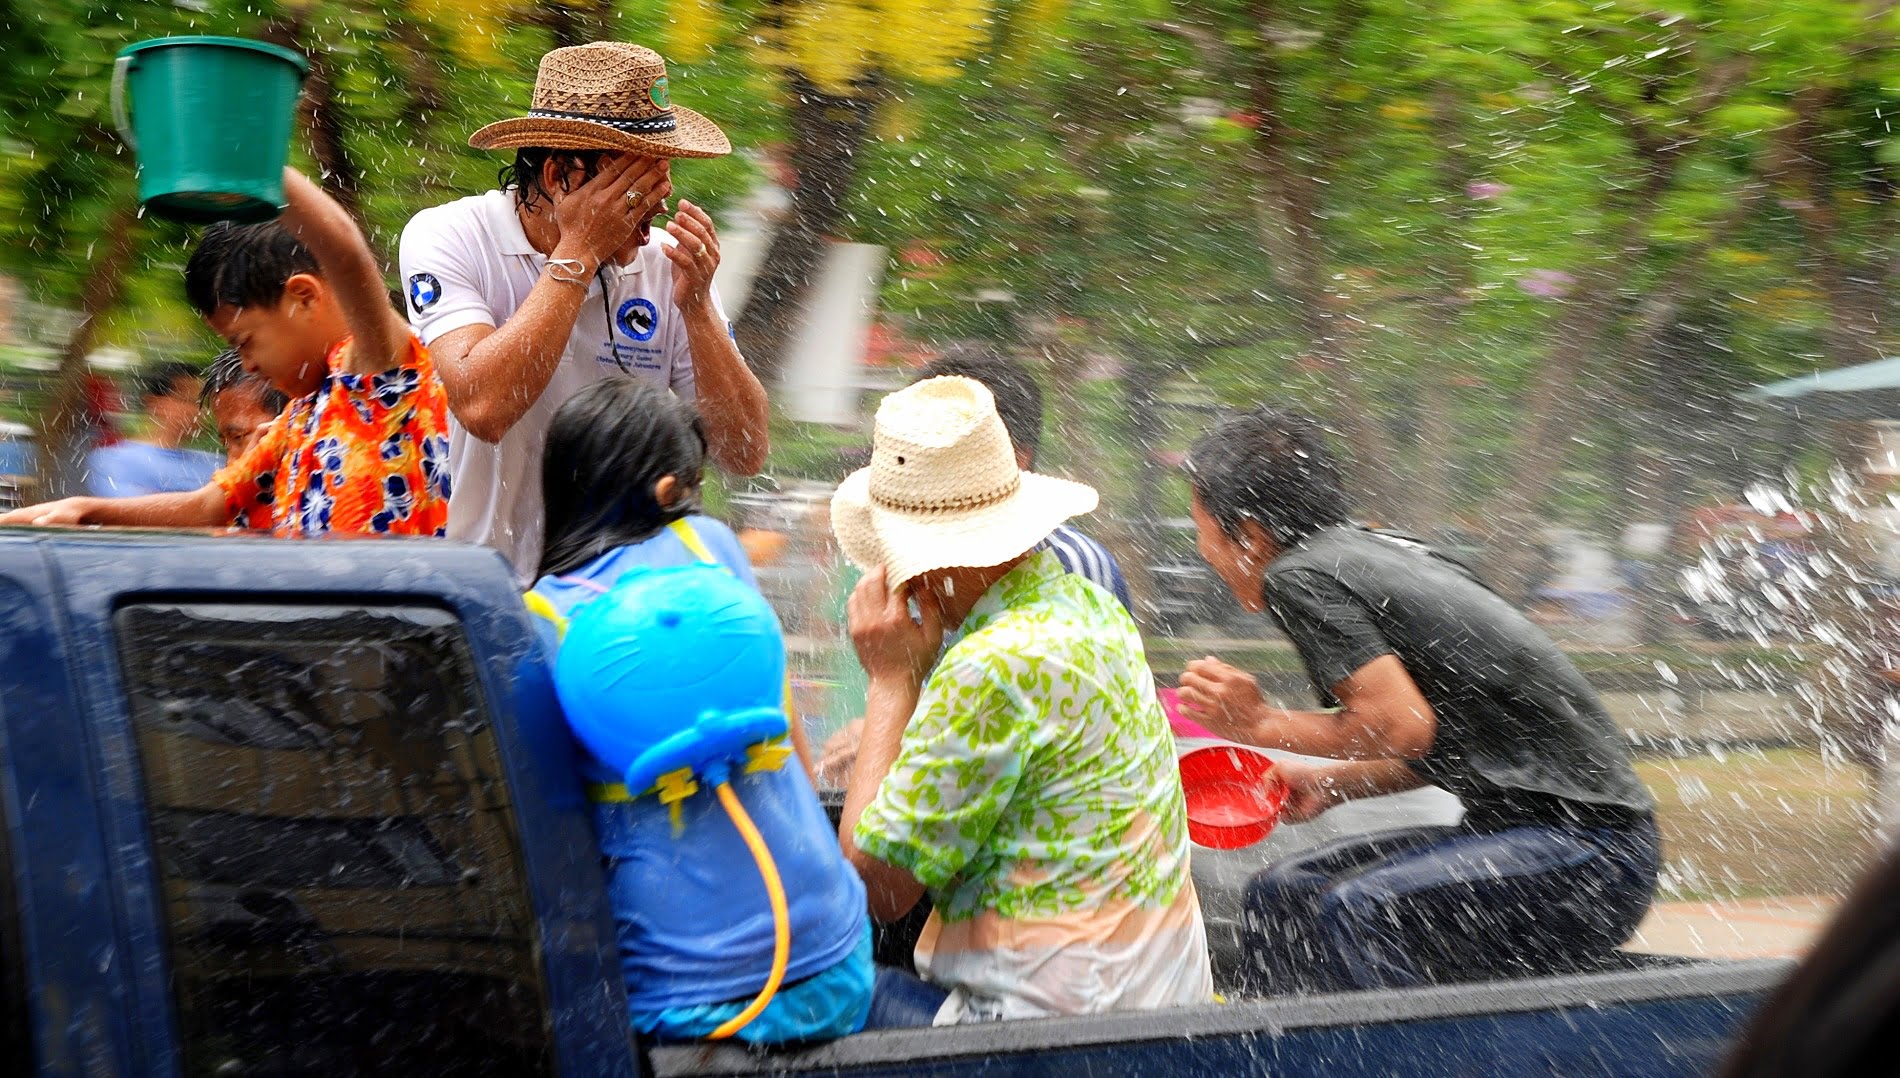 Songkran Thai Festival - Photo free of rights